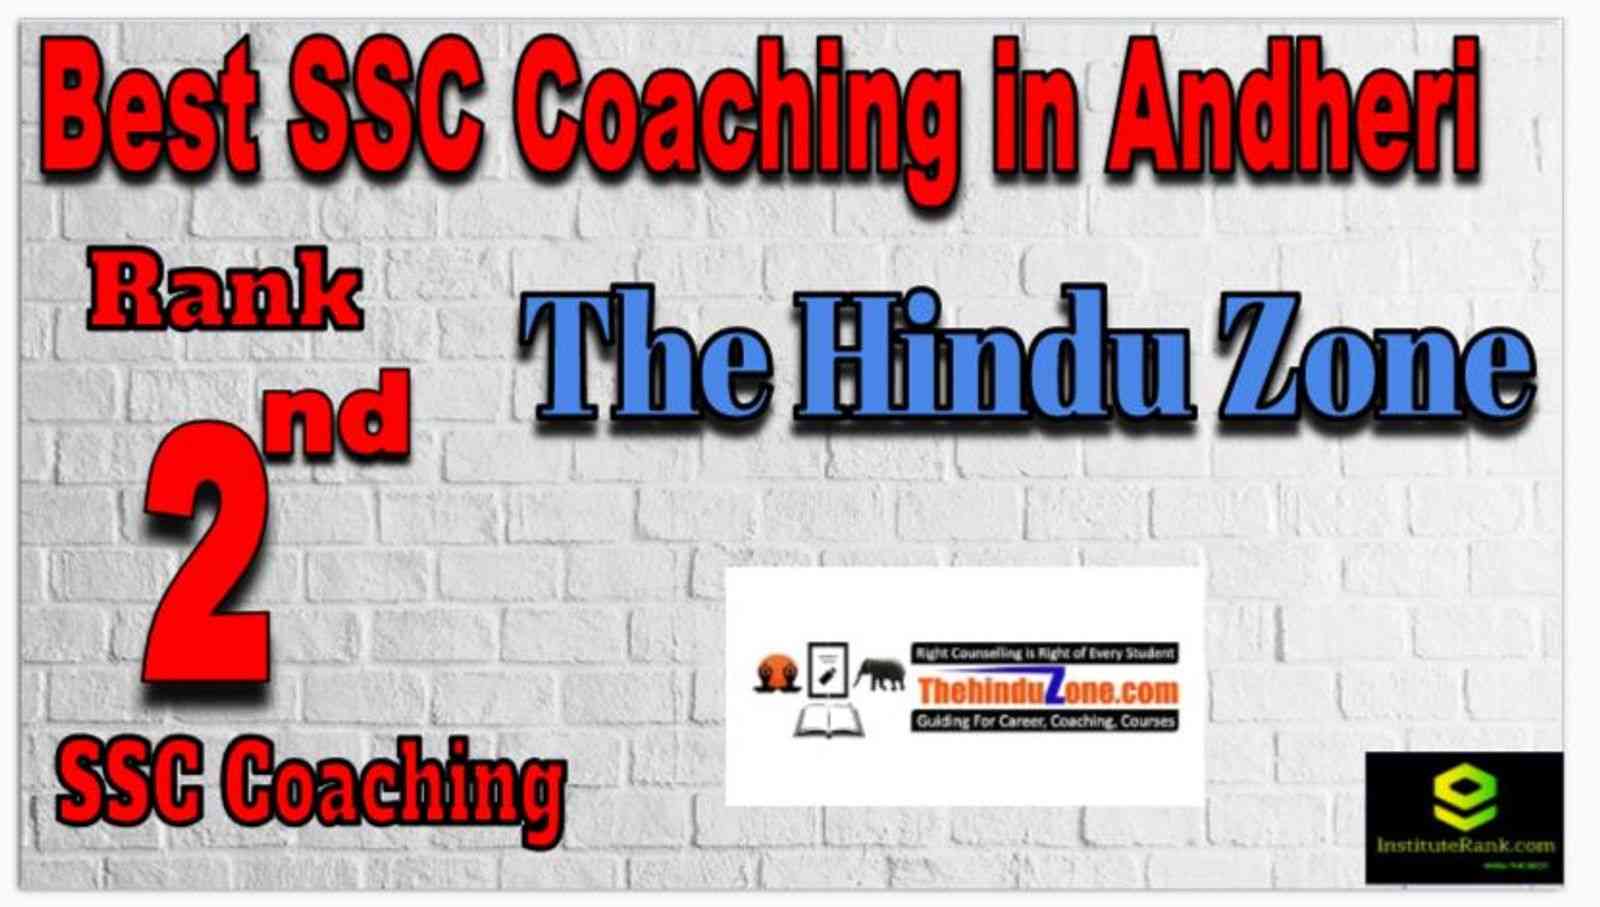 Rank 2 Best SSC Coaching in Andheri